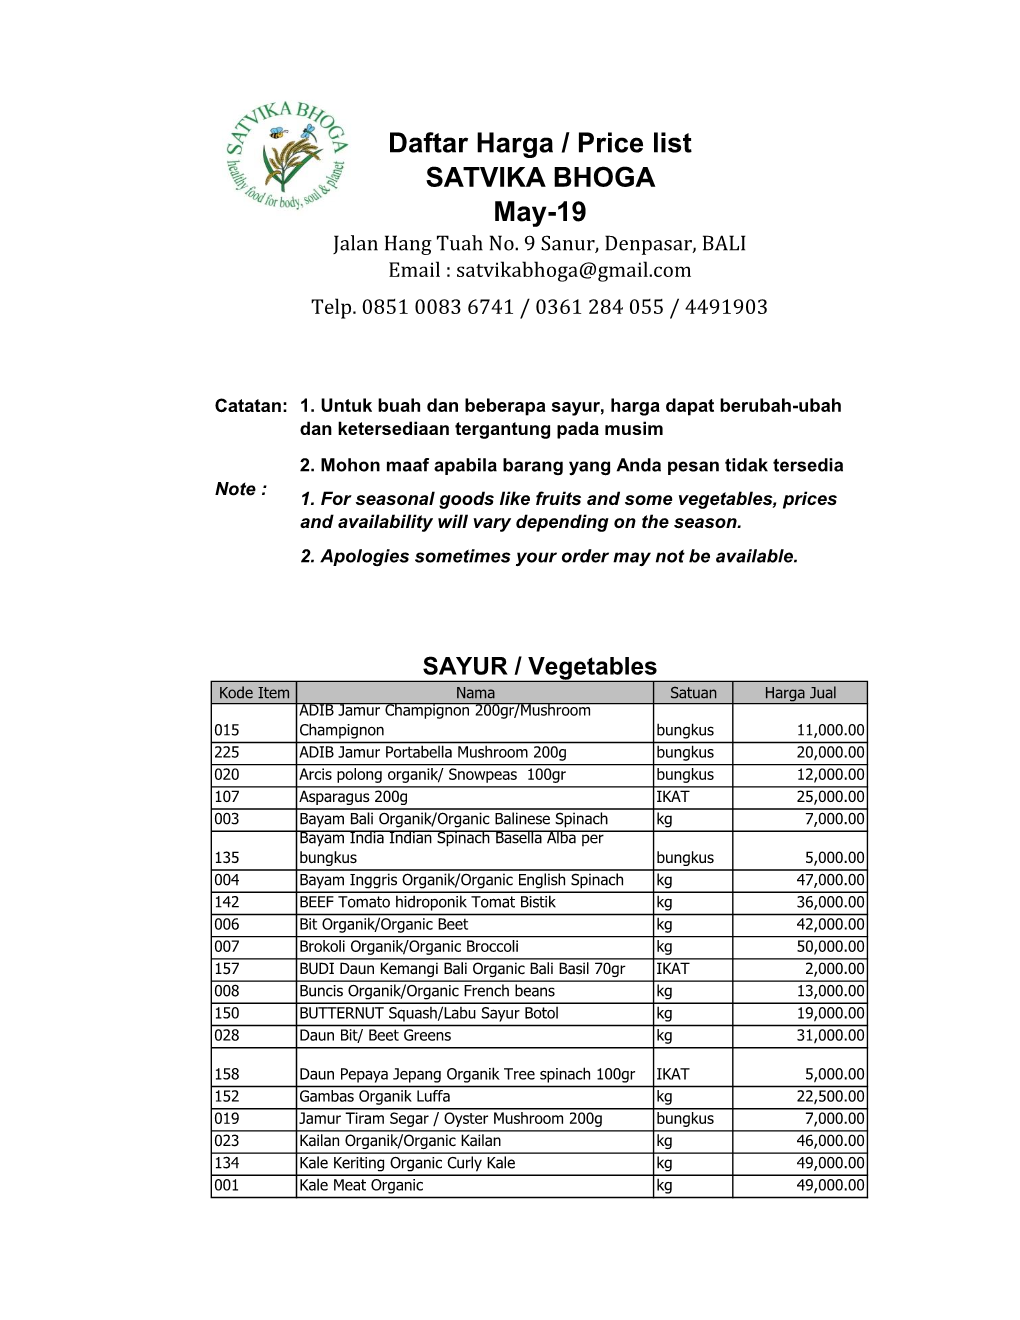 Daftar Harga / Price List SATVIKA BHOGA May-19 Jalan Hang Tuah No